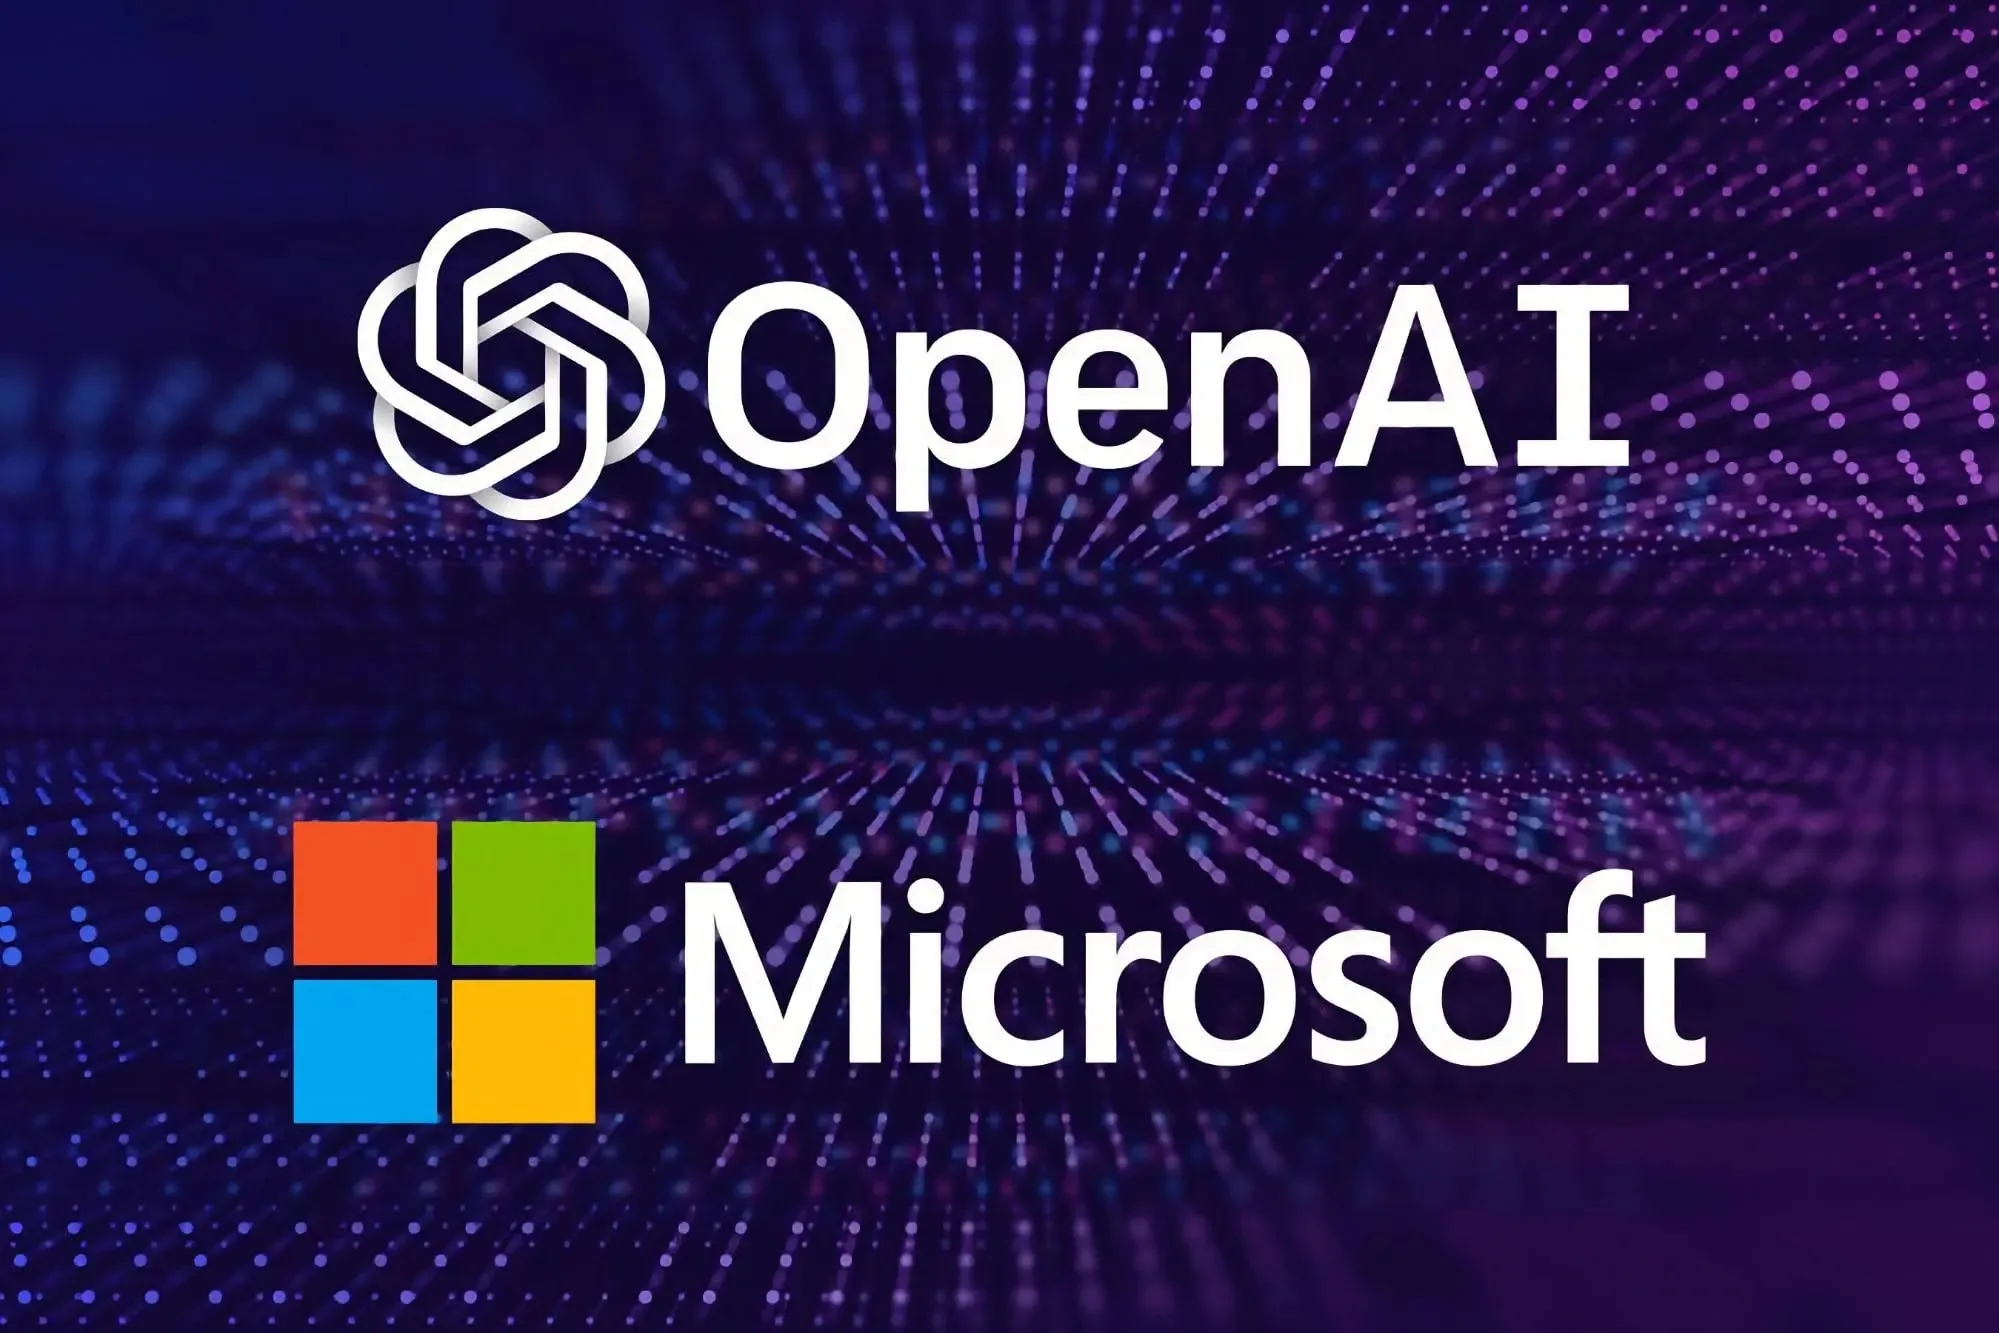 OpenAI and MIcrosoft logos appea jpg